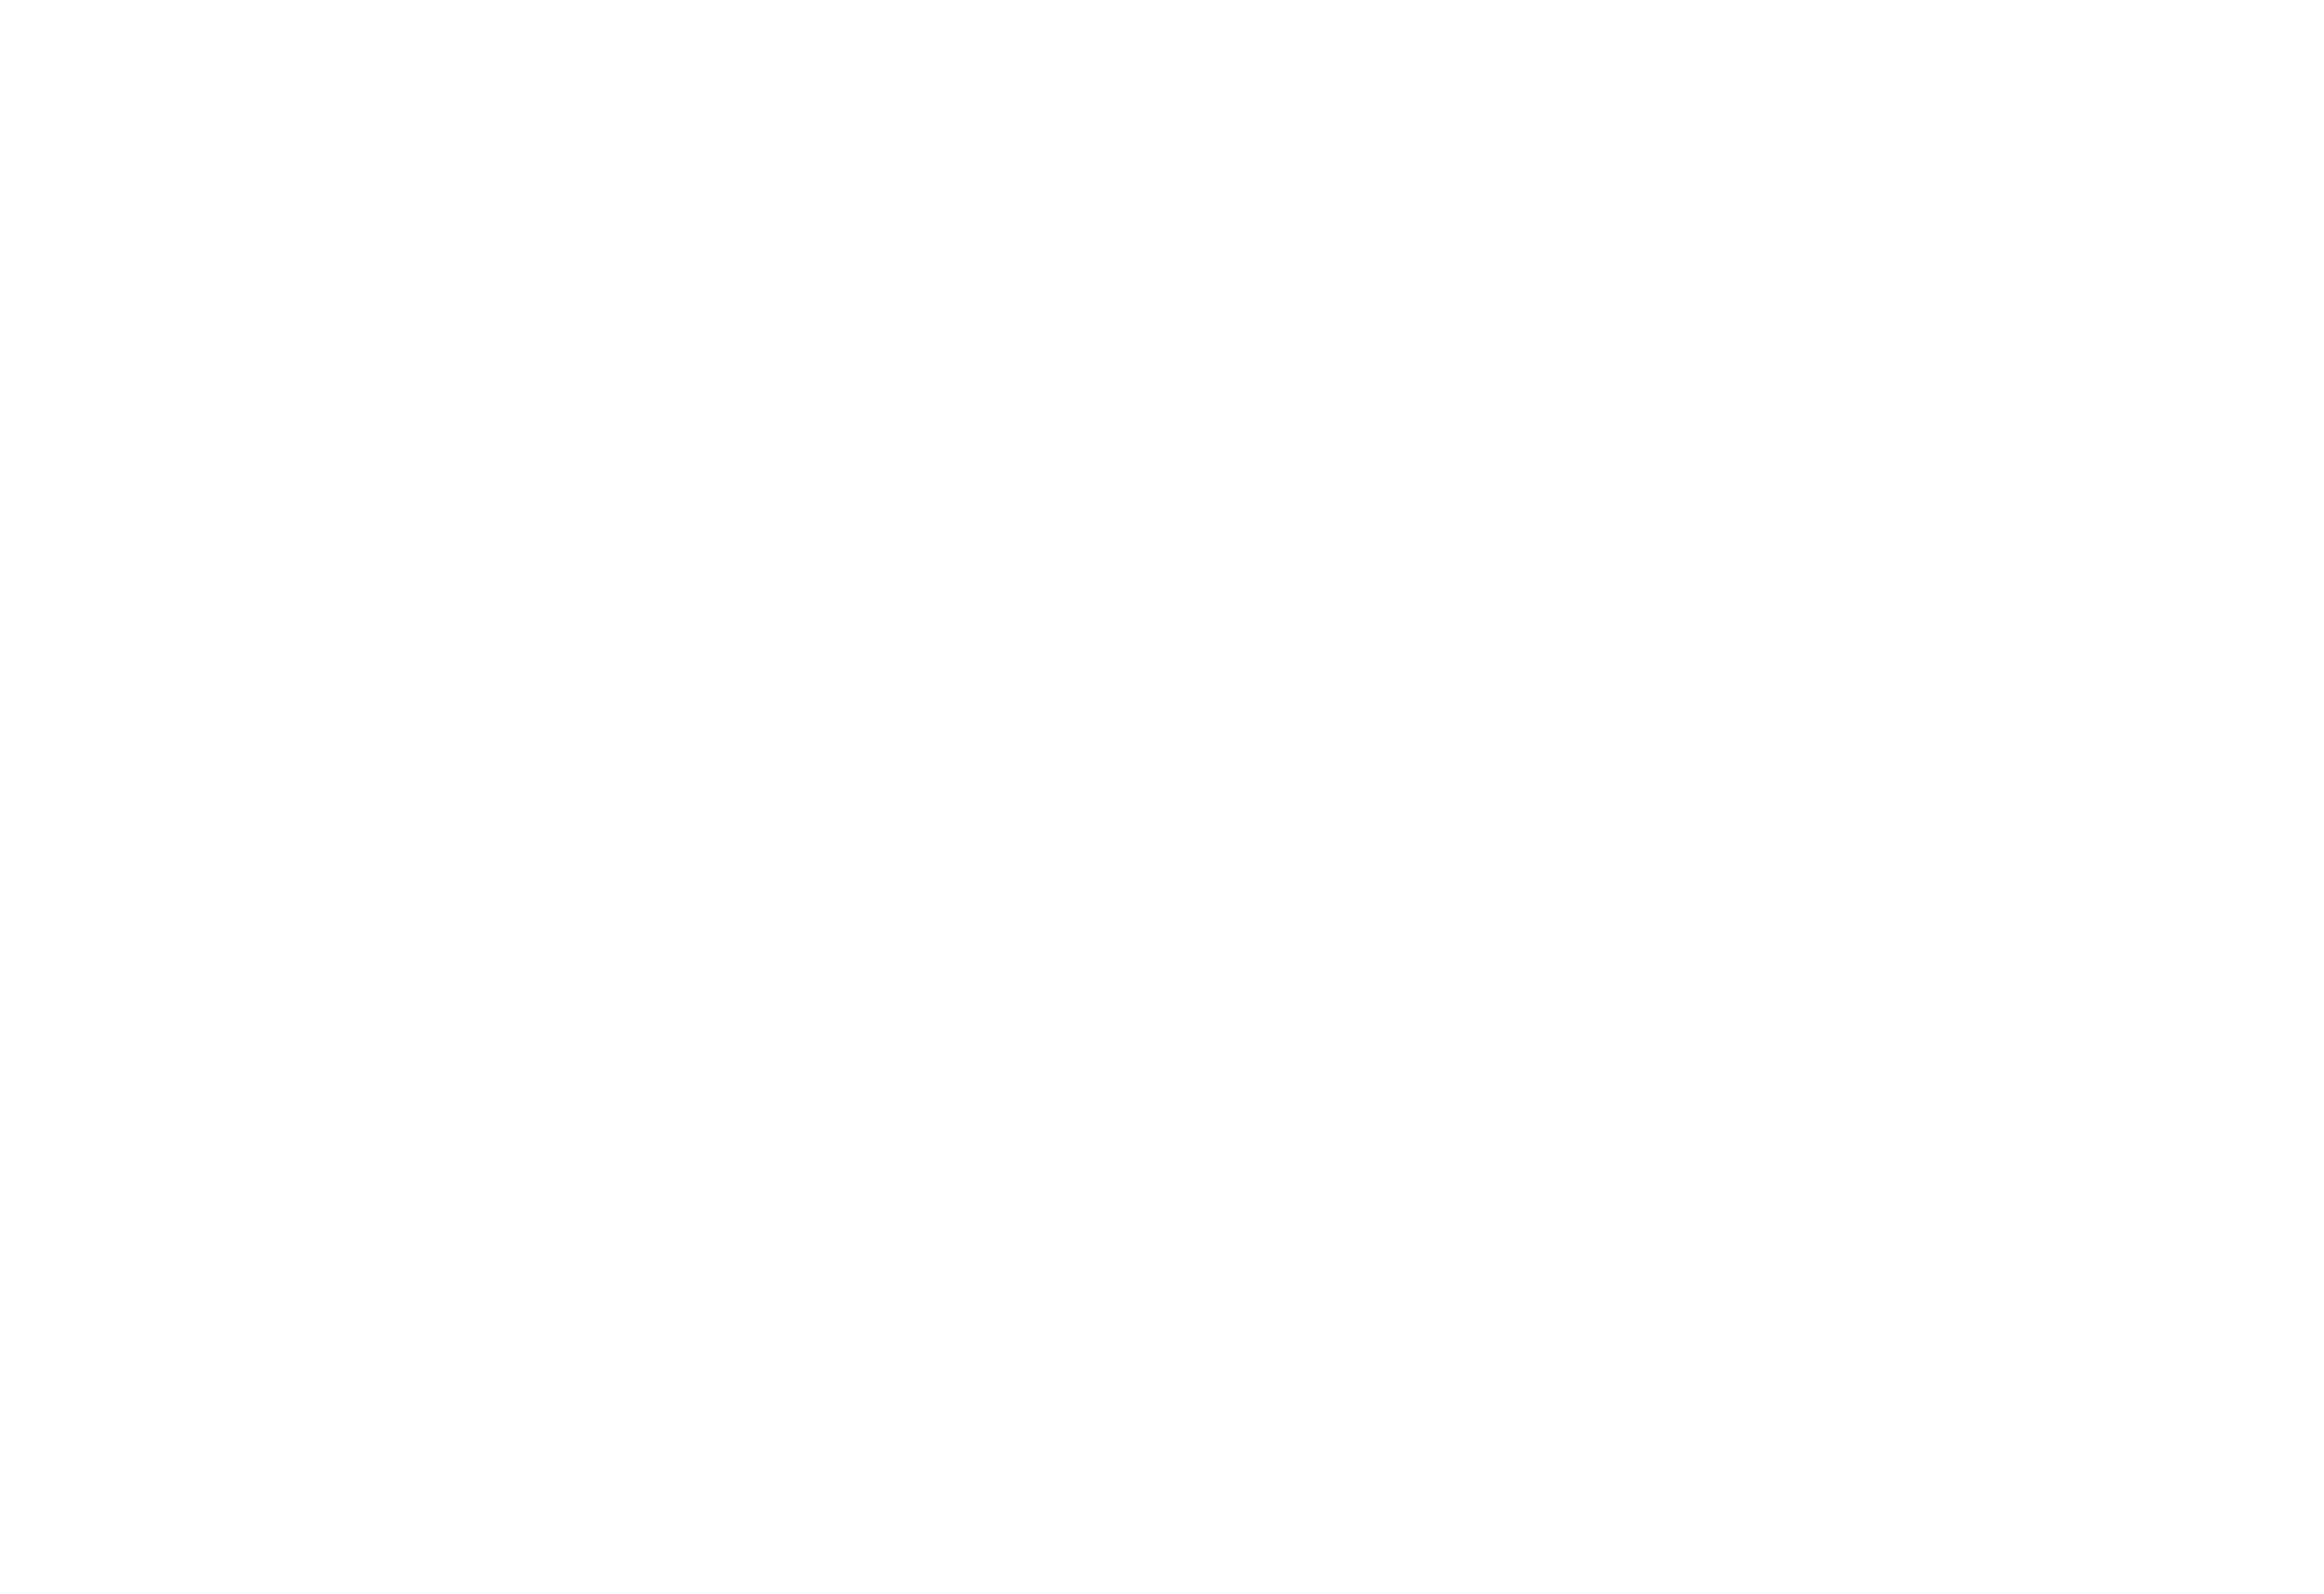 Supercel Brandventures